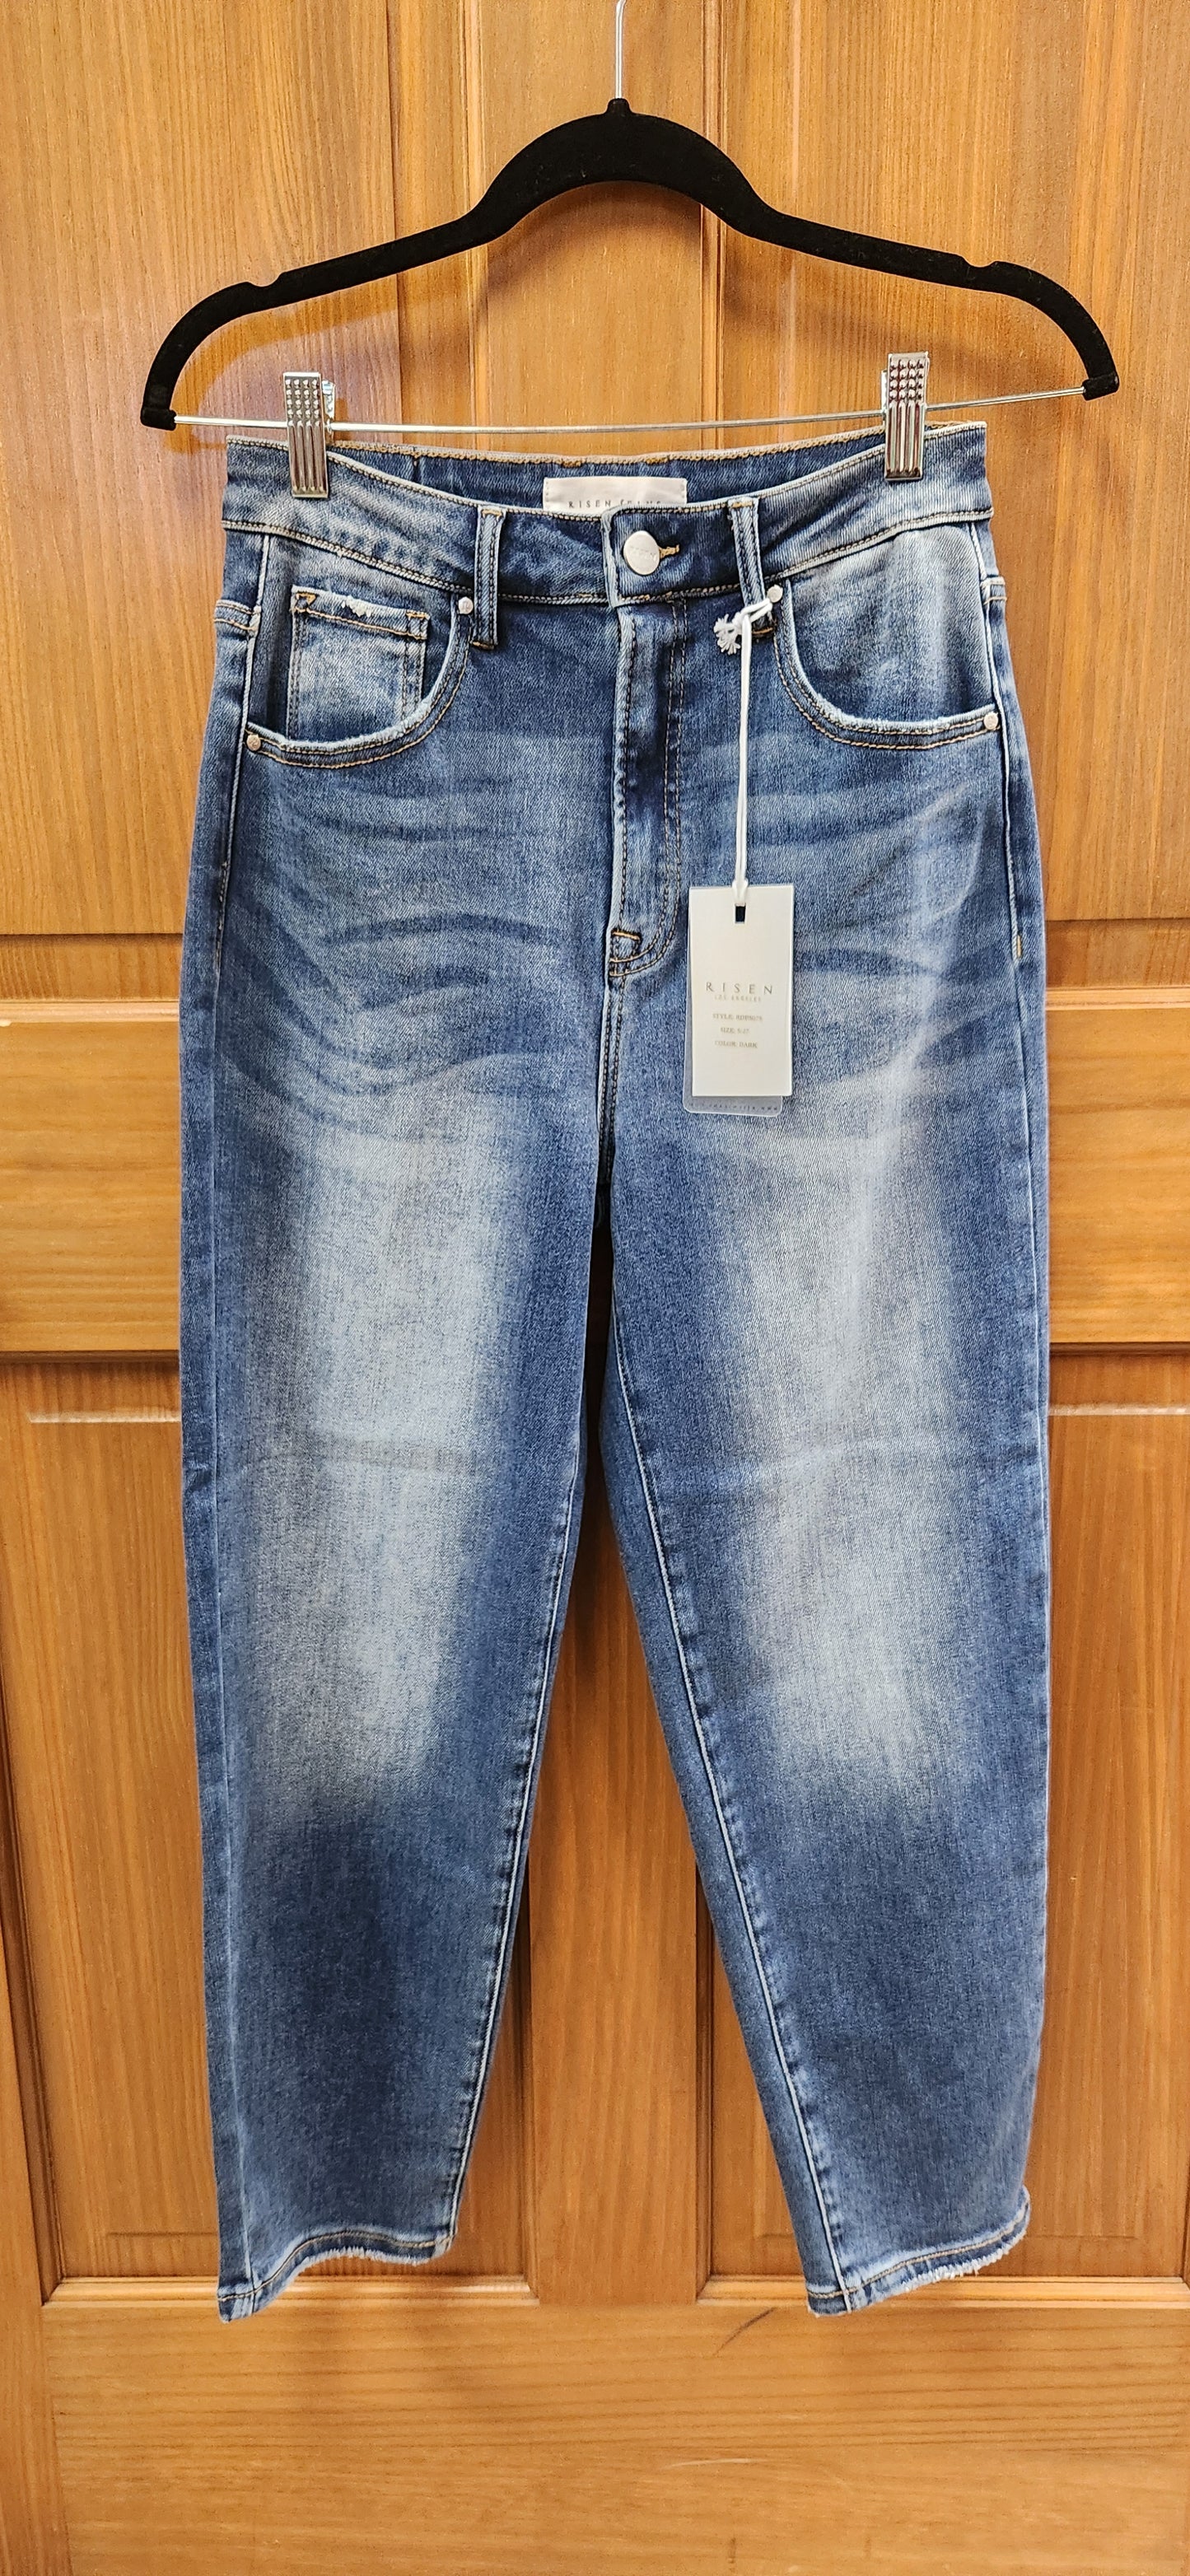 Risen jeans size 5